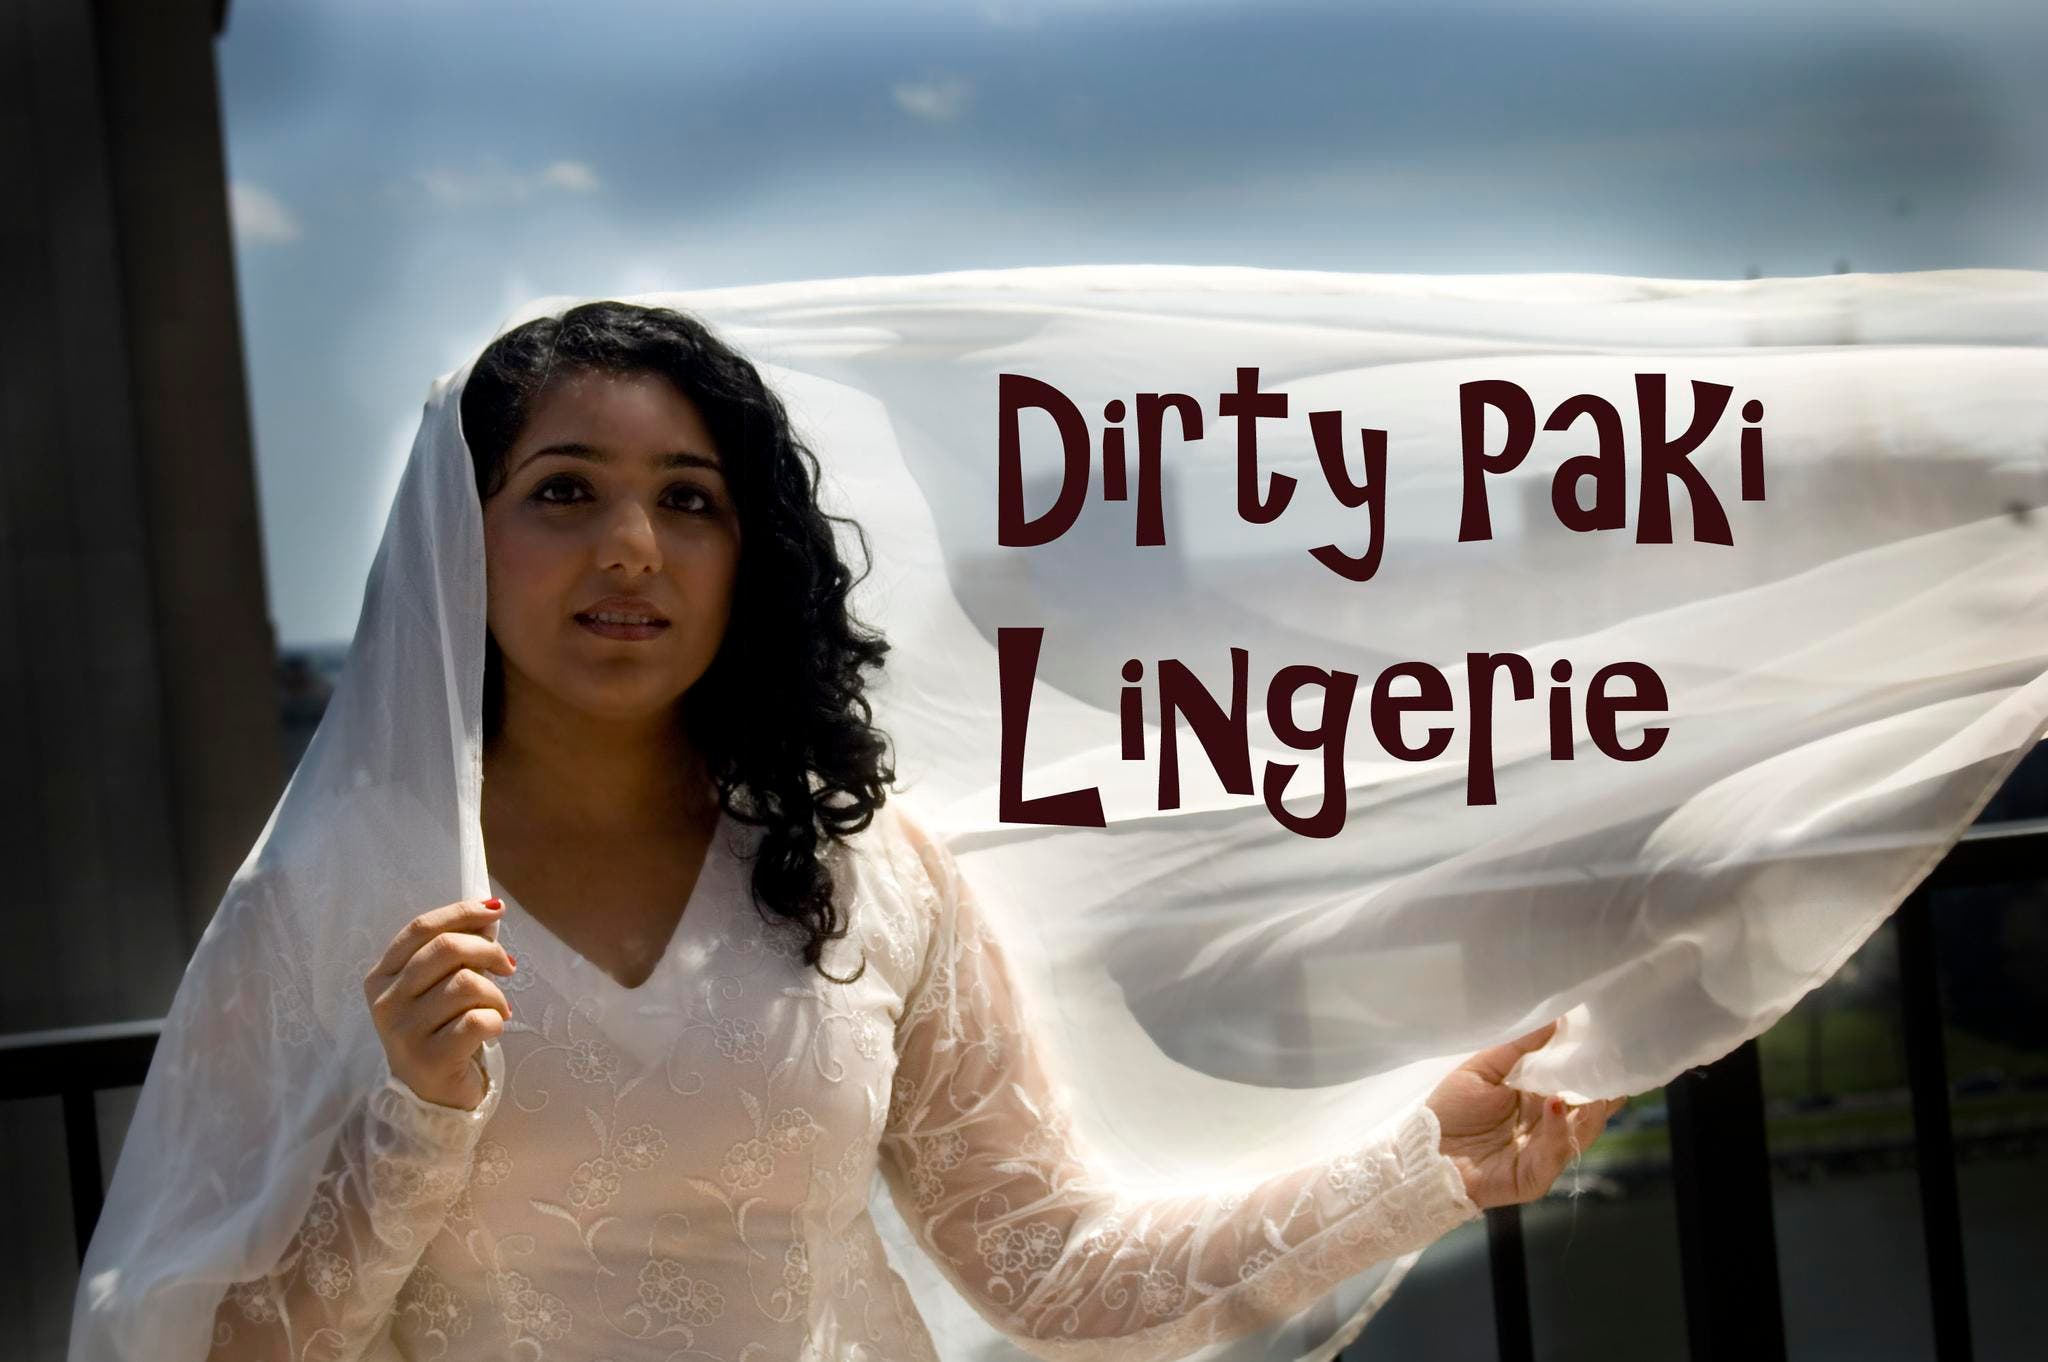 Play Dirty Paki Lingerie makes London debut after world tour Al Arabiya English